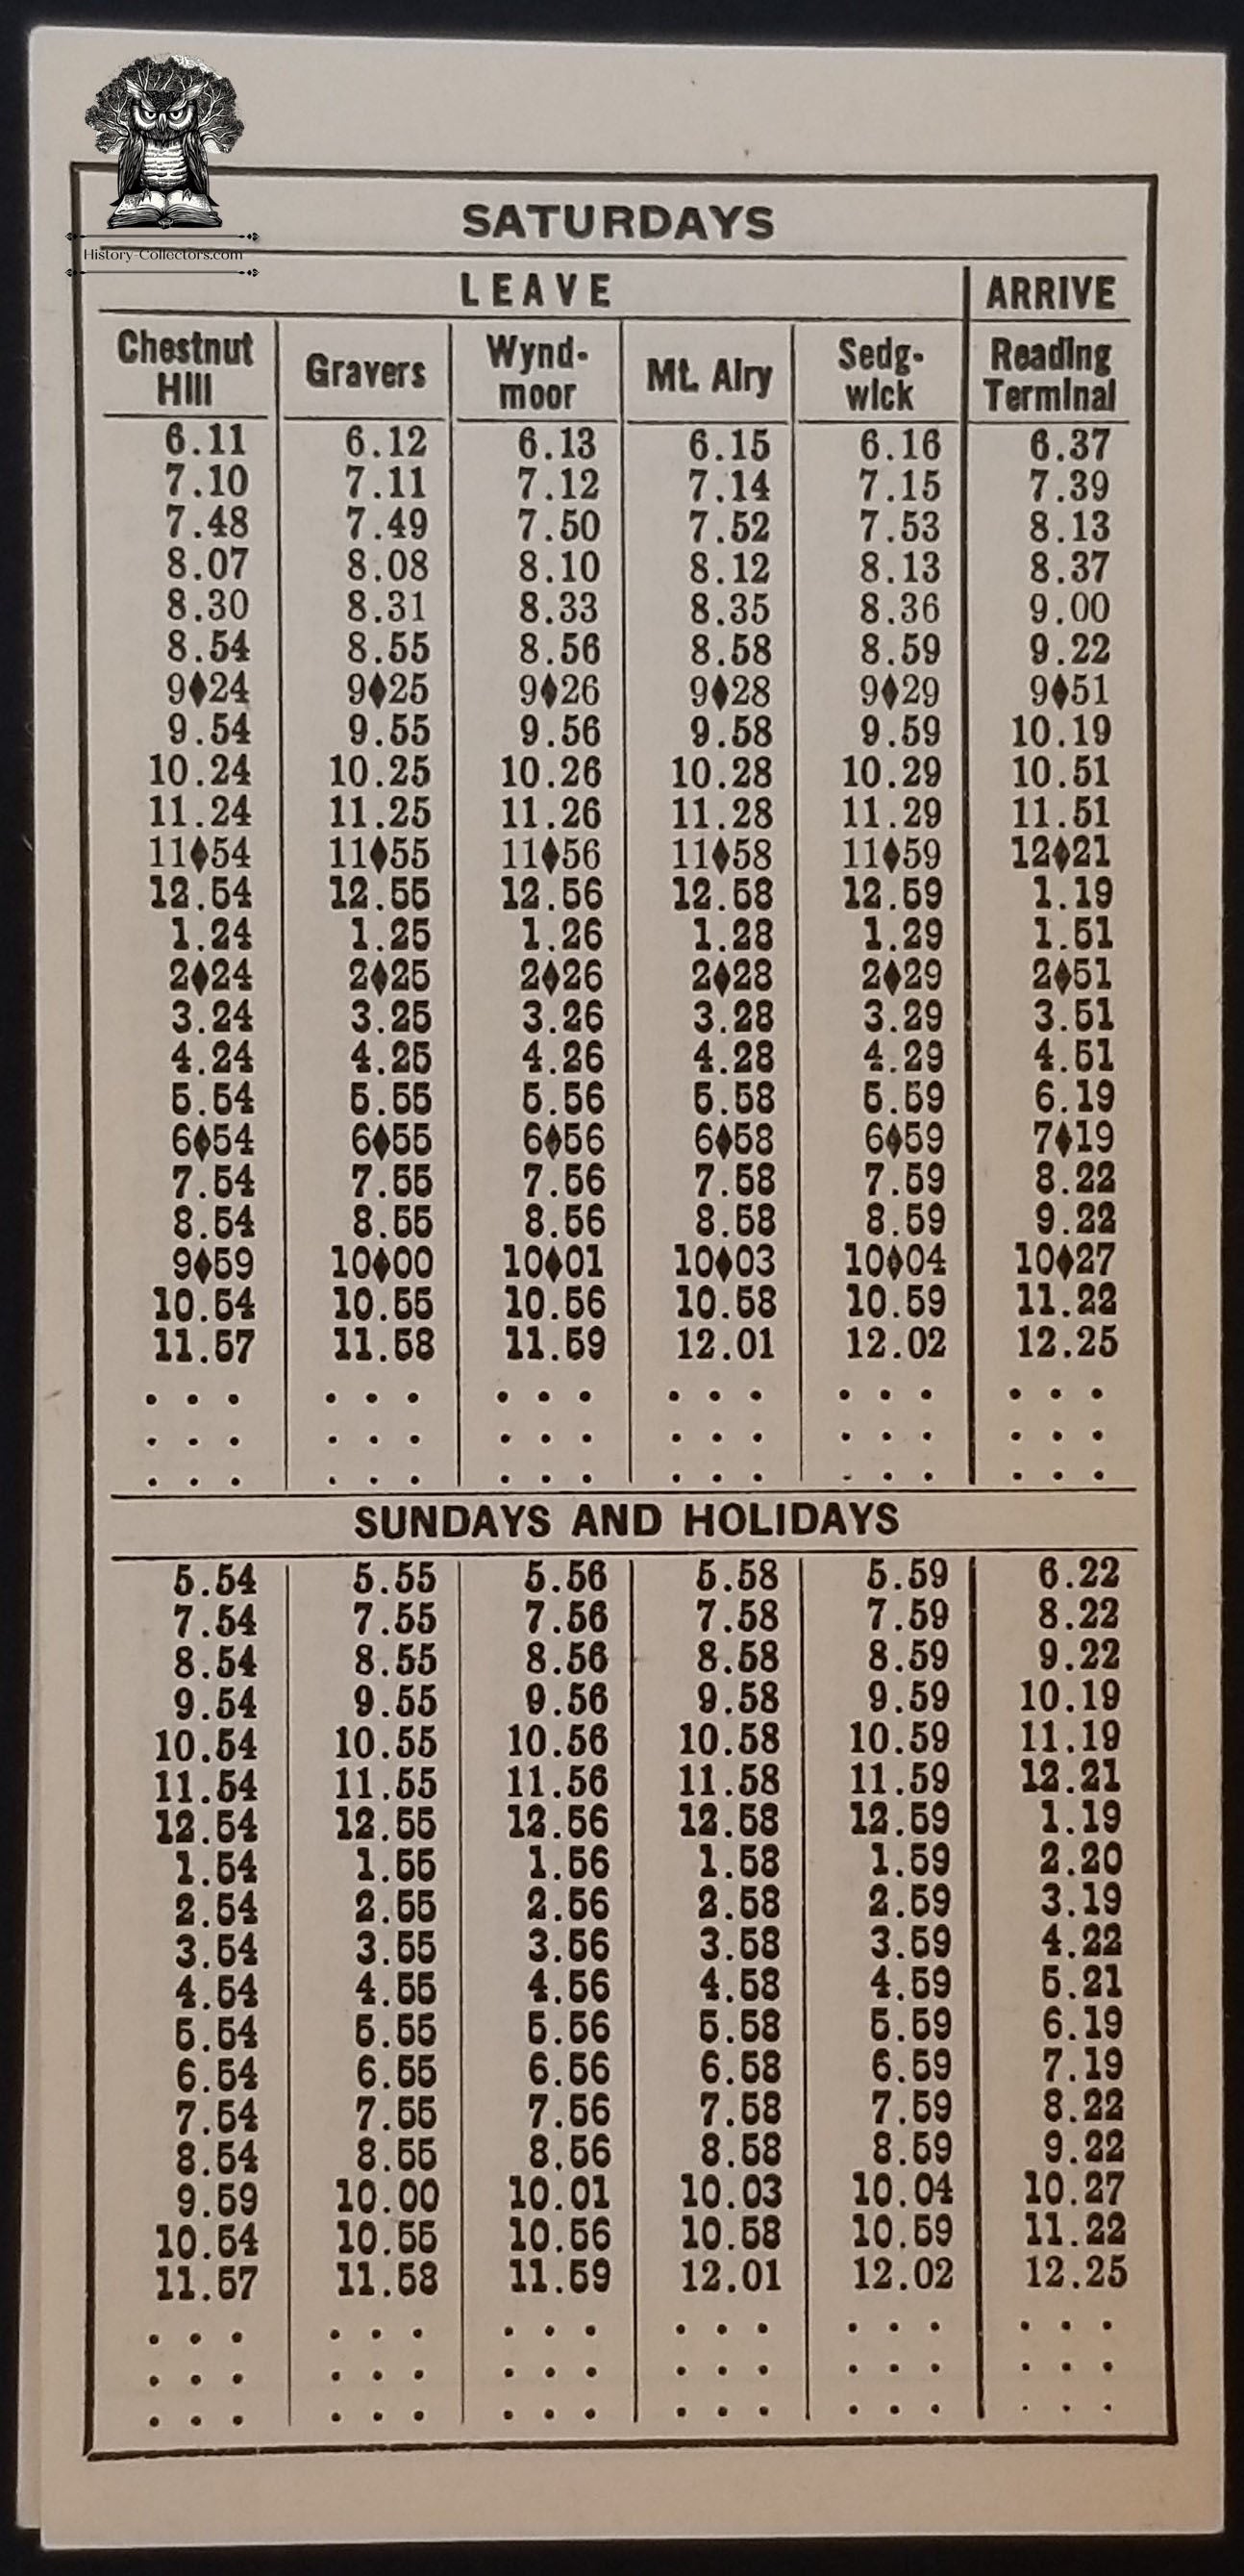 1952 Reading Railway Schedule Pamphlet Gravers Station Pennsylvania Railroad